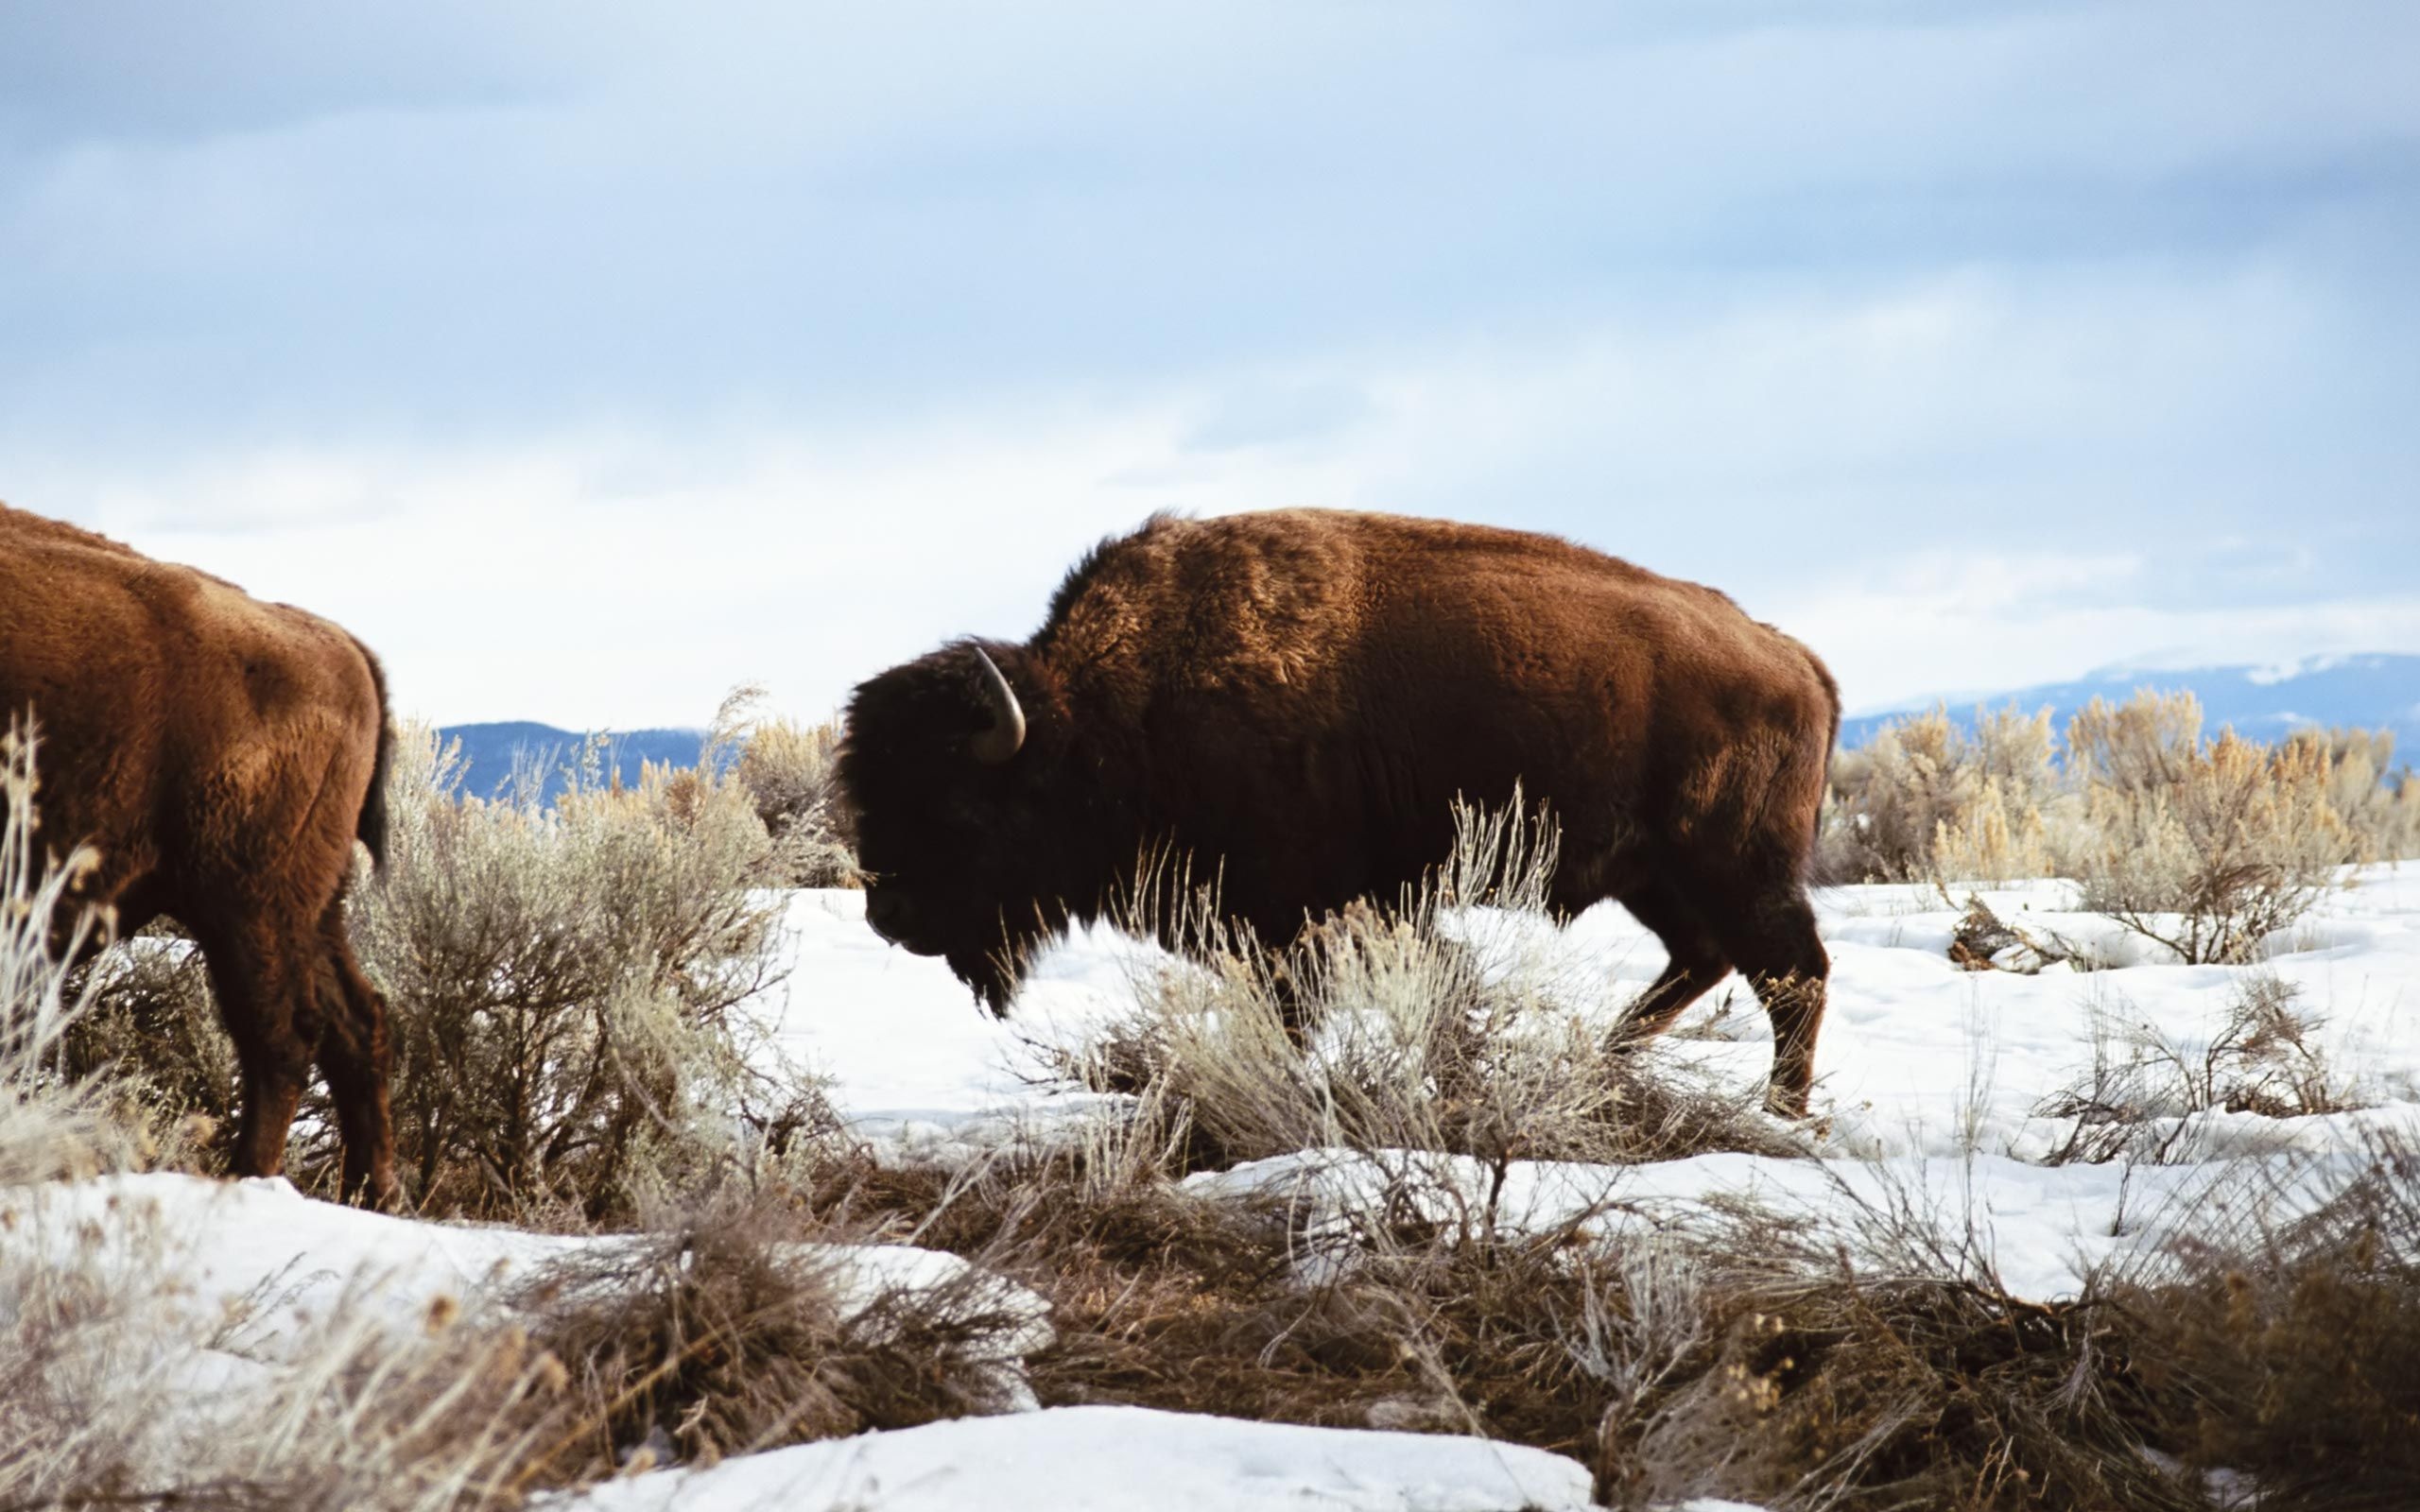 American bison in HD, Gorgeous bison photos, Bison as pet birds, Bison beauty captured, 2560x1600 HD Desktop